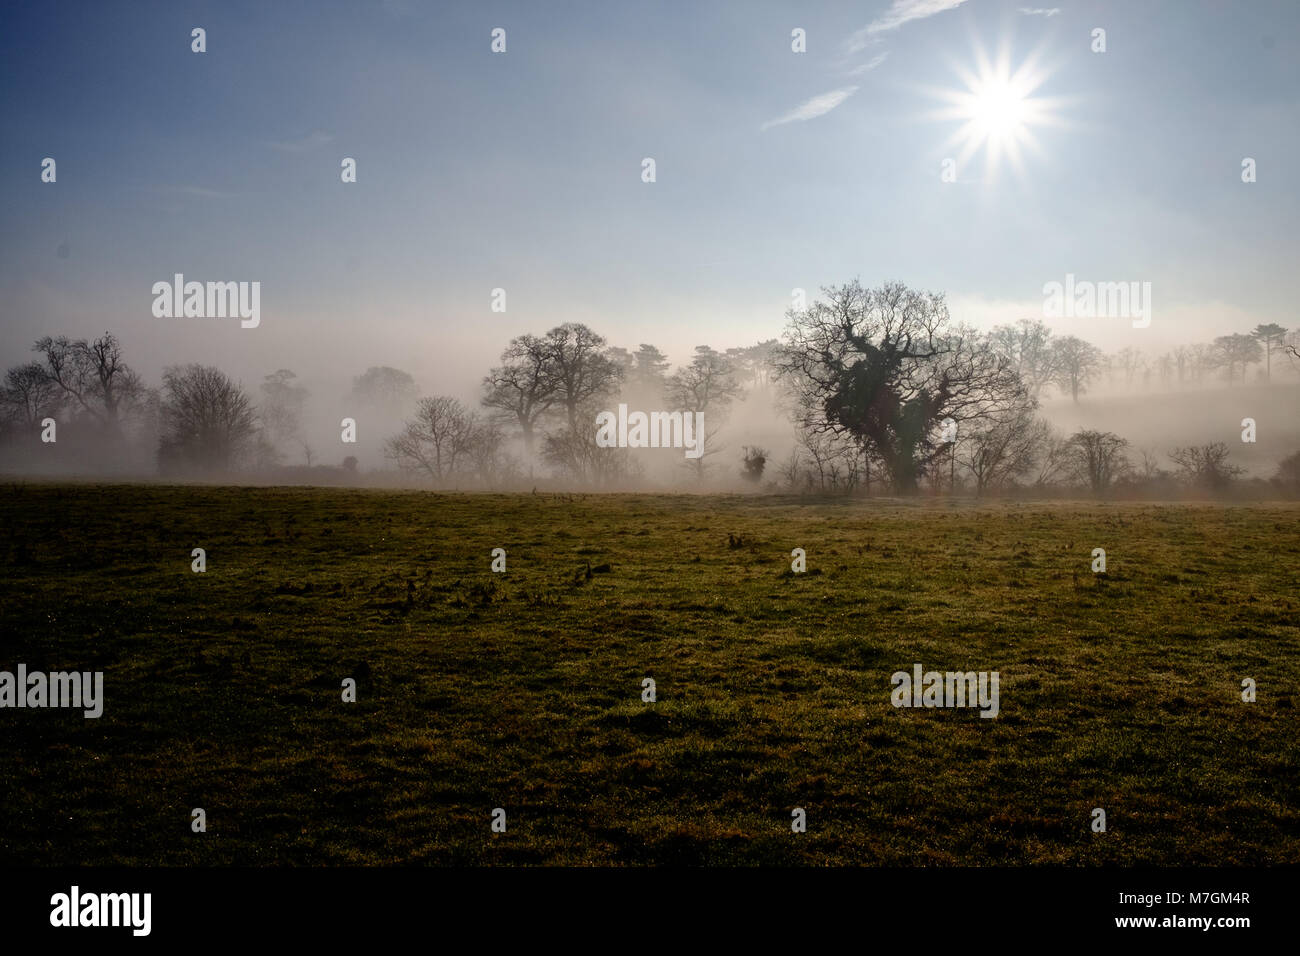 Bäume am Rand eines Feldes mit Morgennebel gehüllt in Totteridge UK Stockfoto